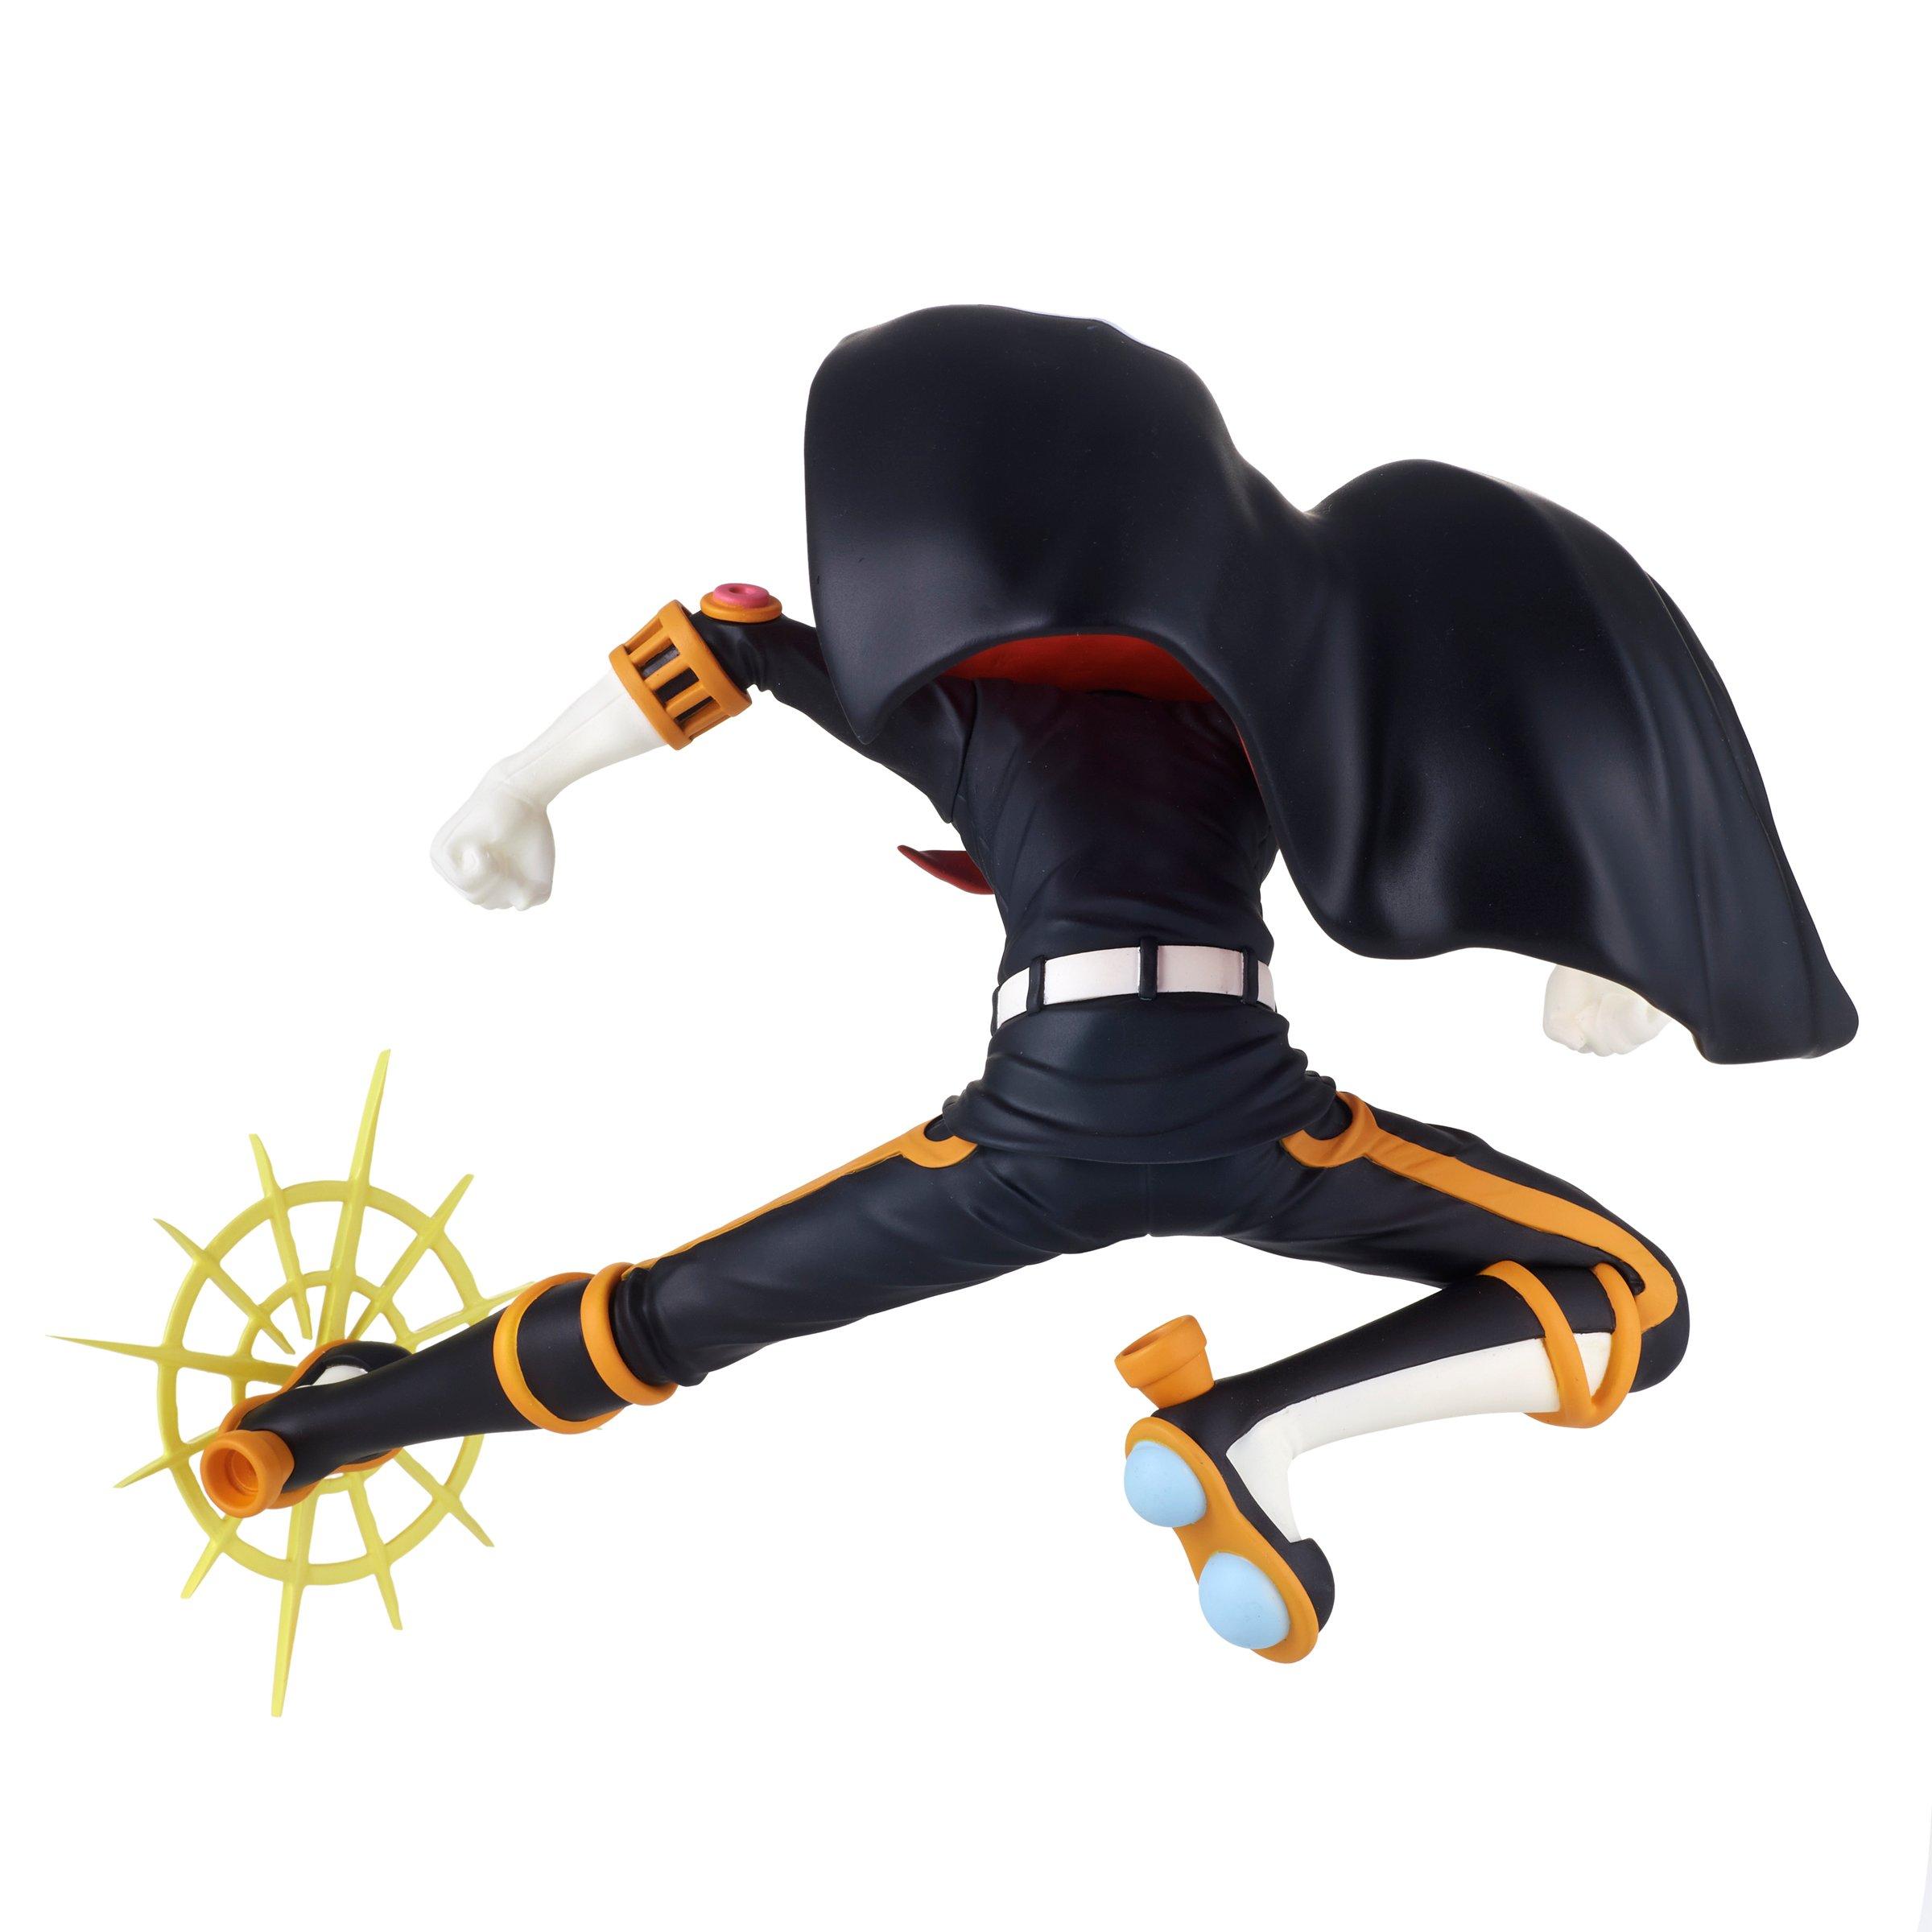 Action Figure Sanji One Piece Banpresto